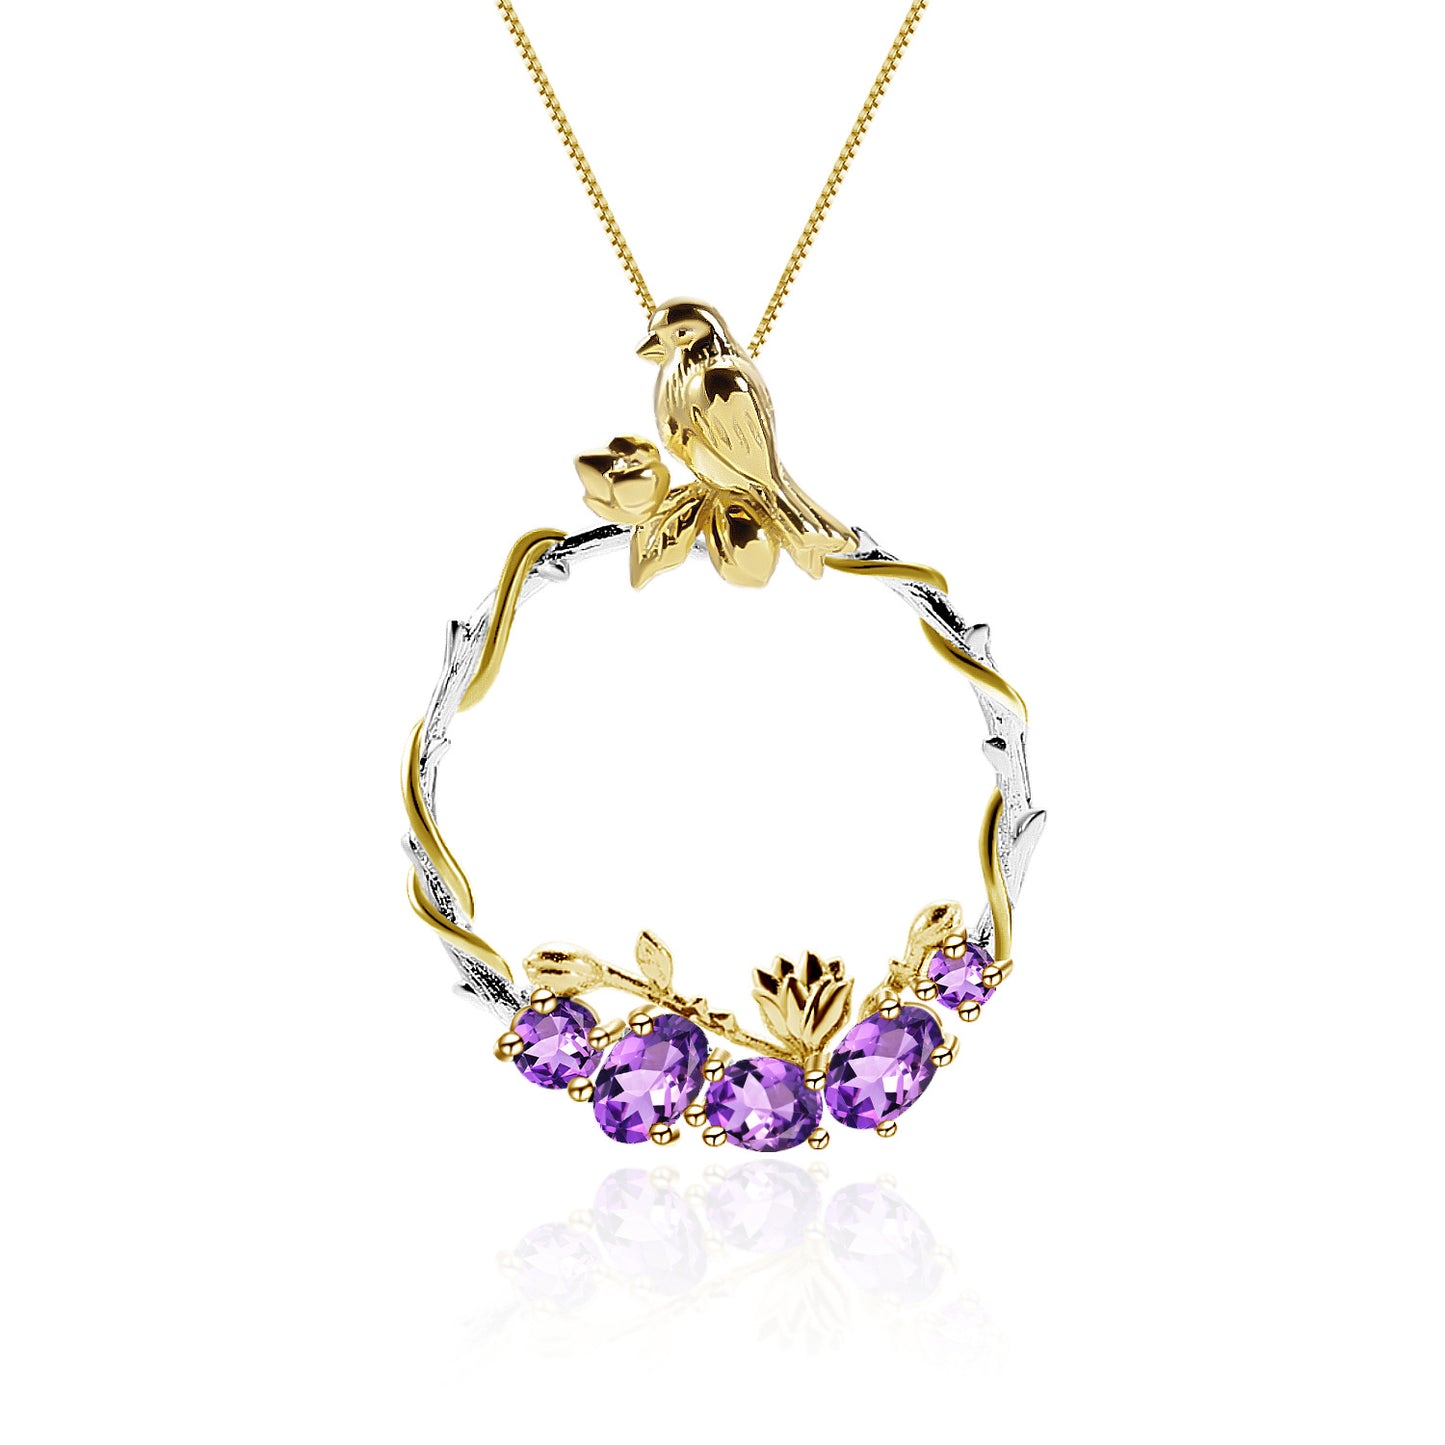 Secret Garden Premium Design with Natural Colourful Gemstones Bird's Garden Pendant Silver Necklace for Women